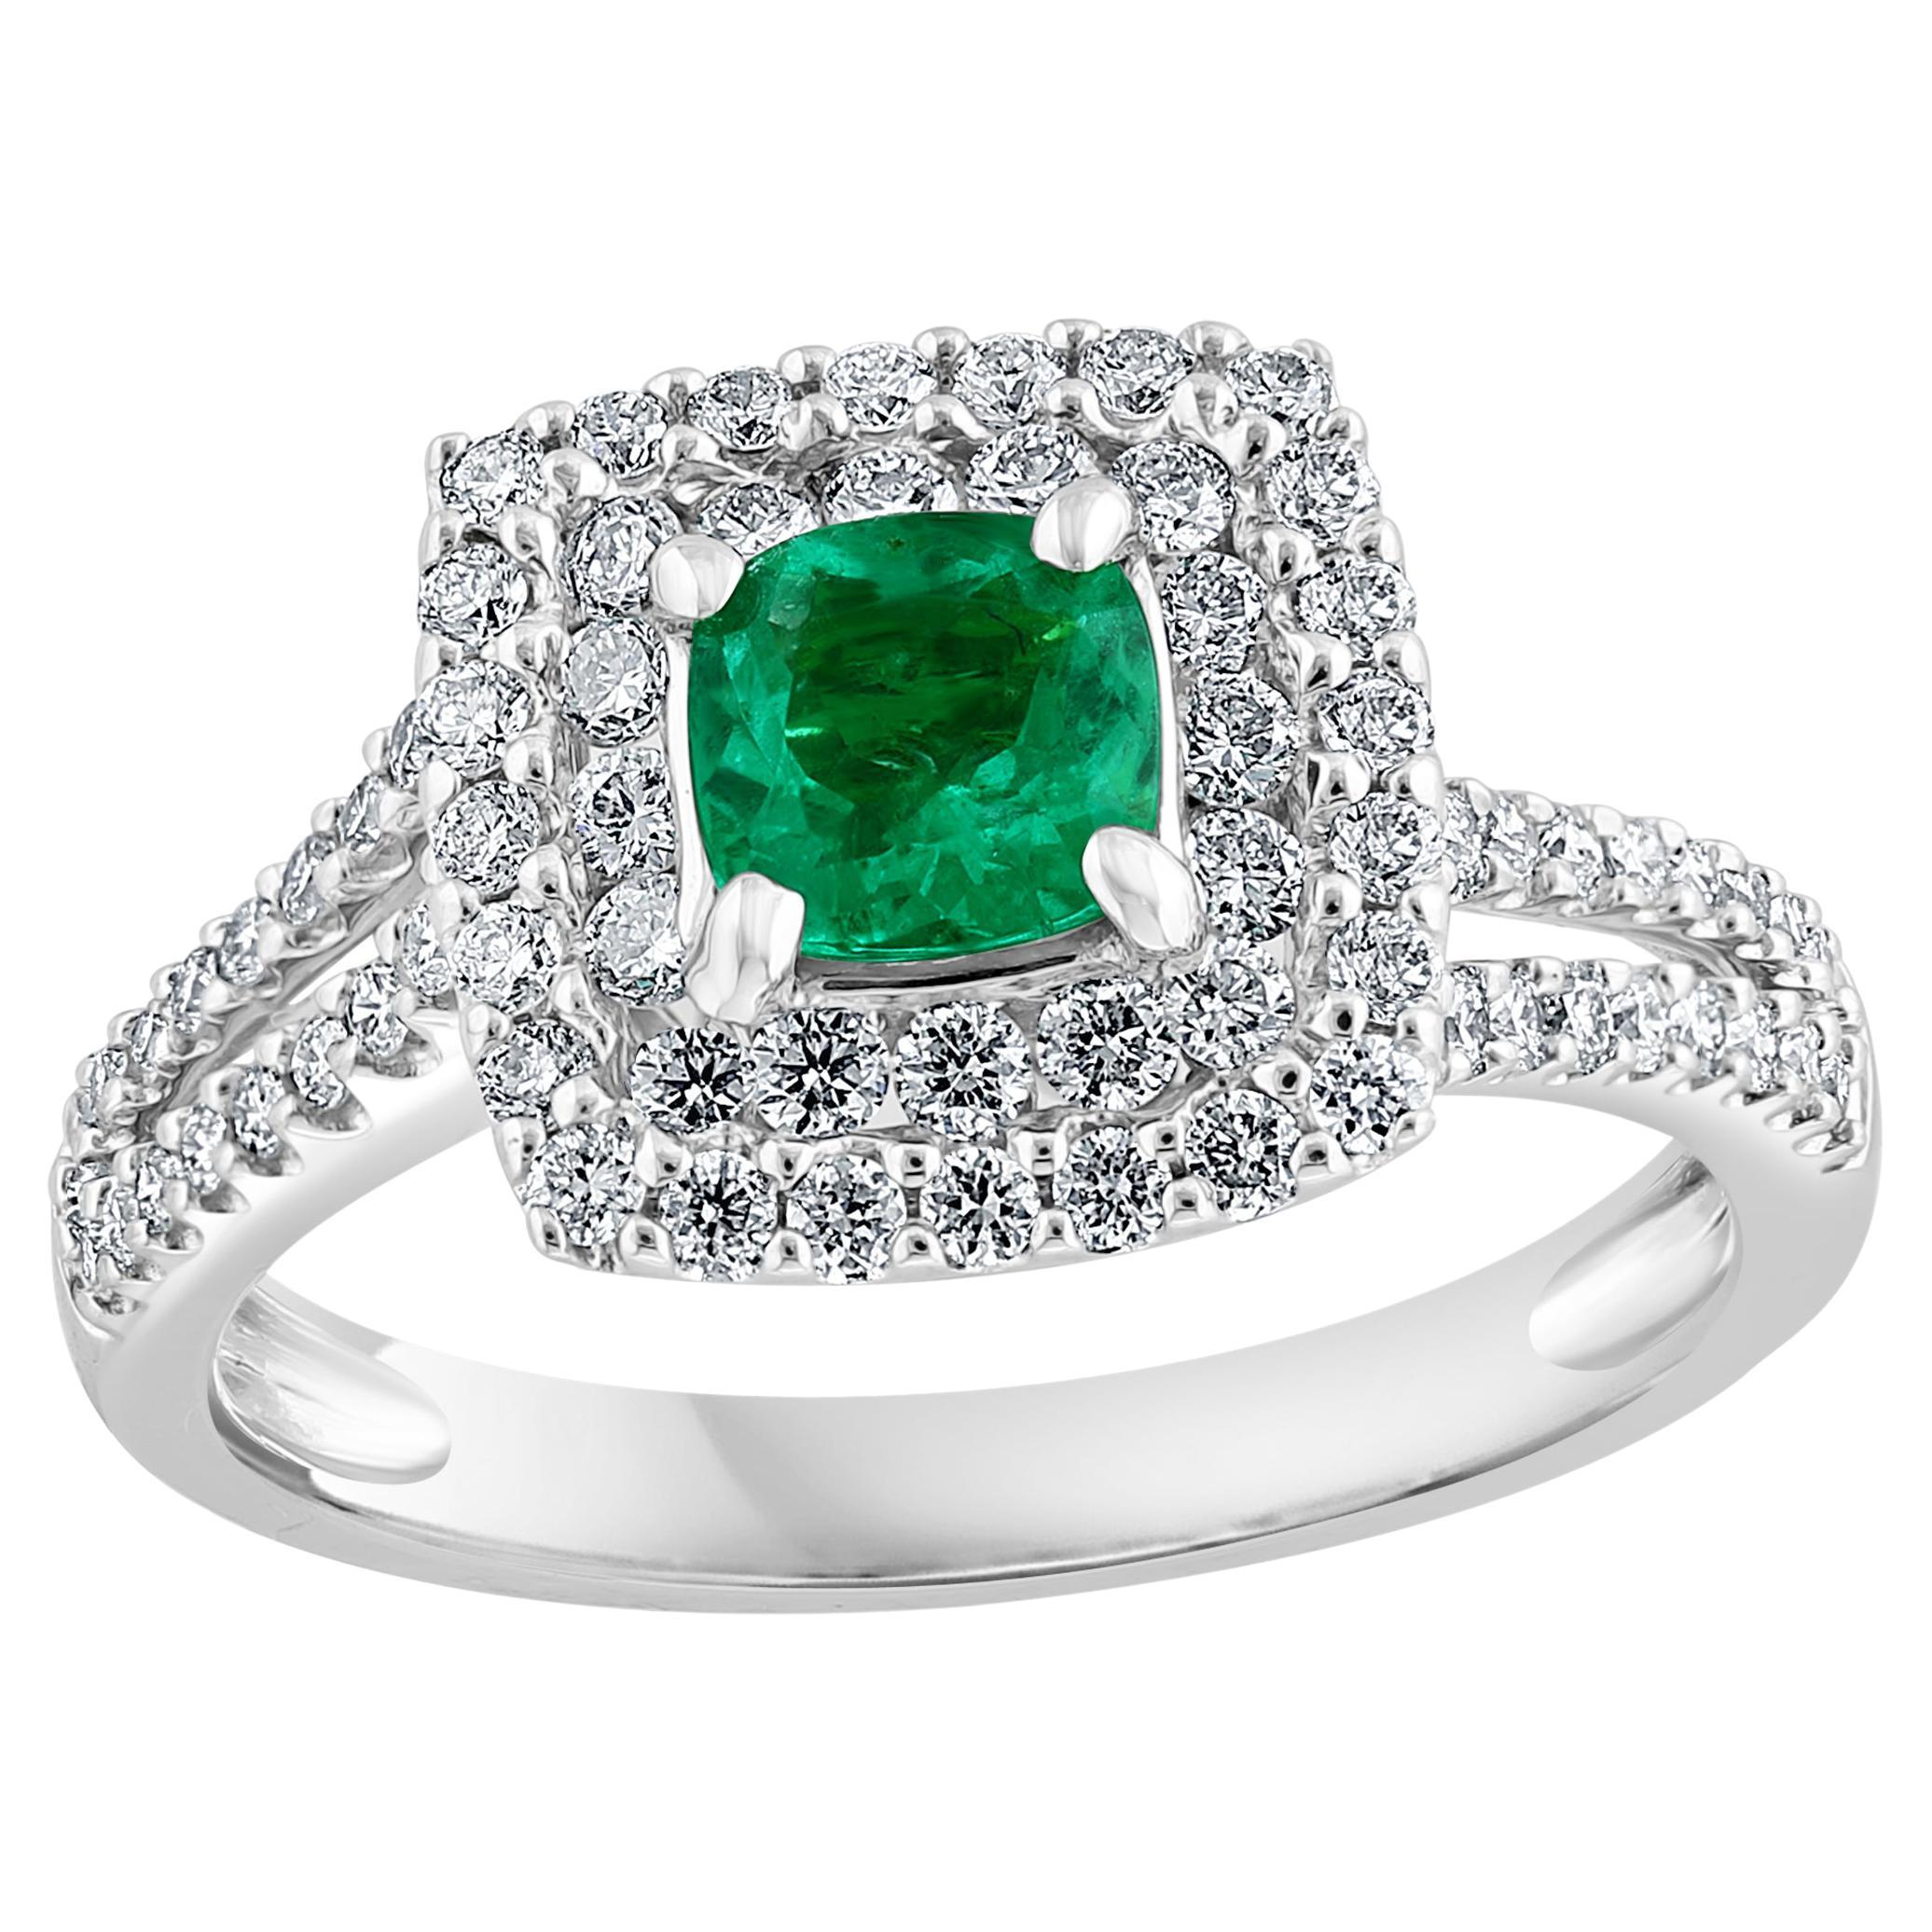 0.48 Carat Cushion Cut Emerald and Diamond Fashion Ring in 18K White Gold